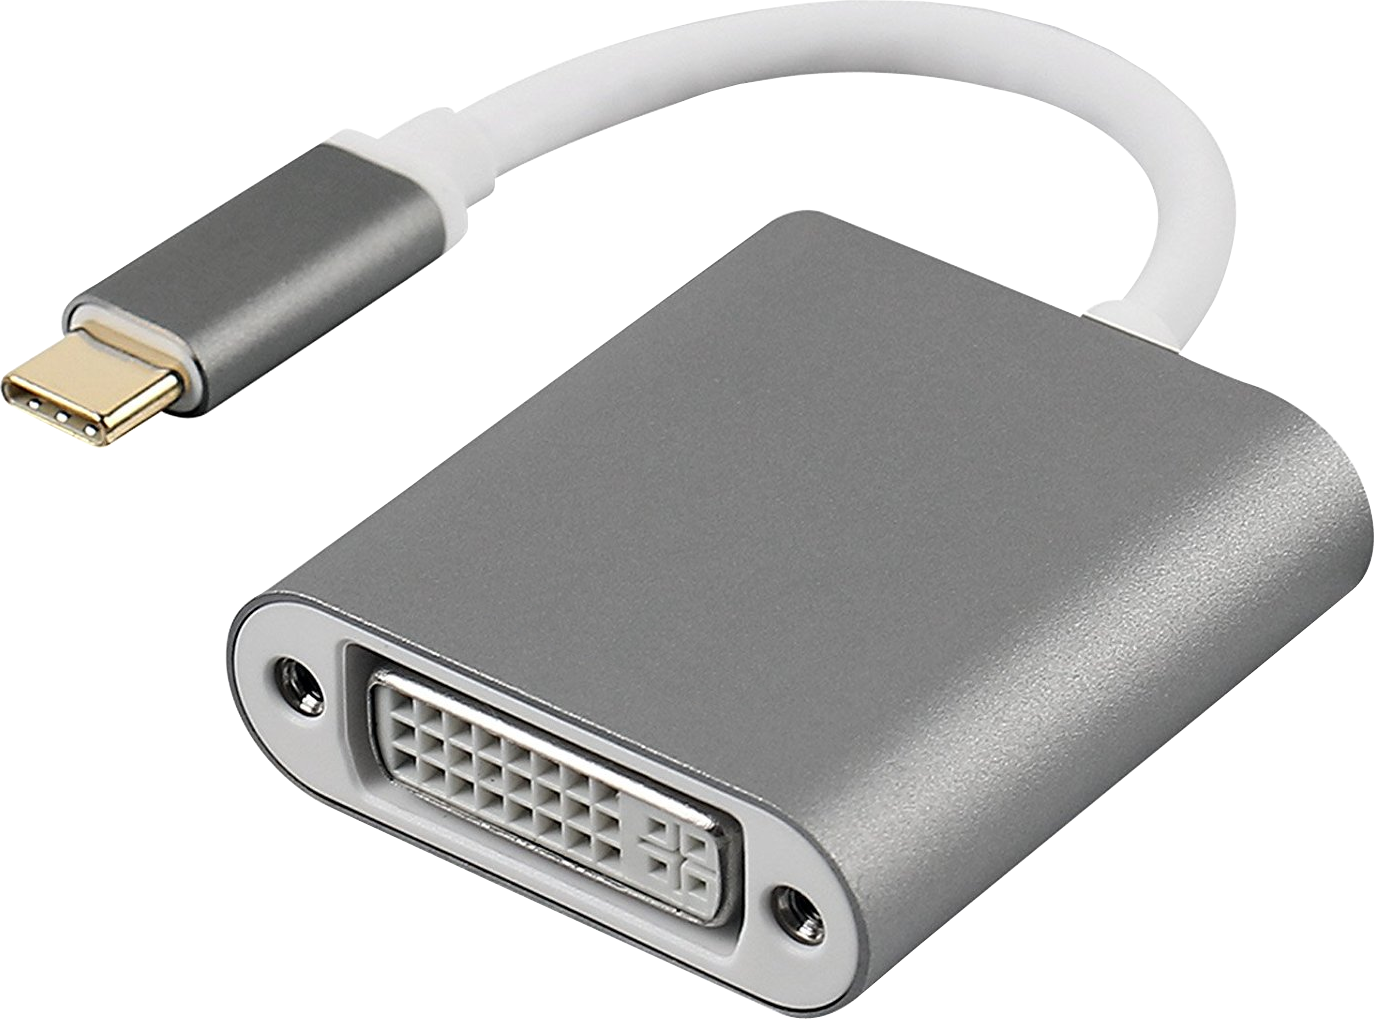 16-6553 USB 3.1 Type C to DVI-D Female Adapter